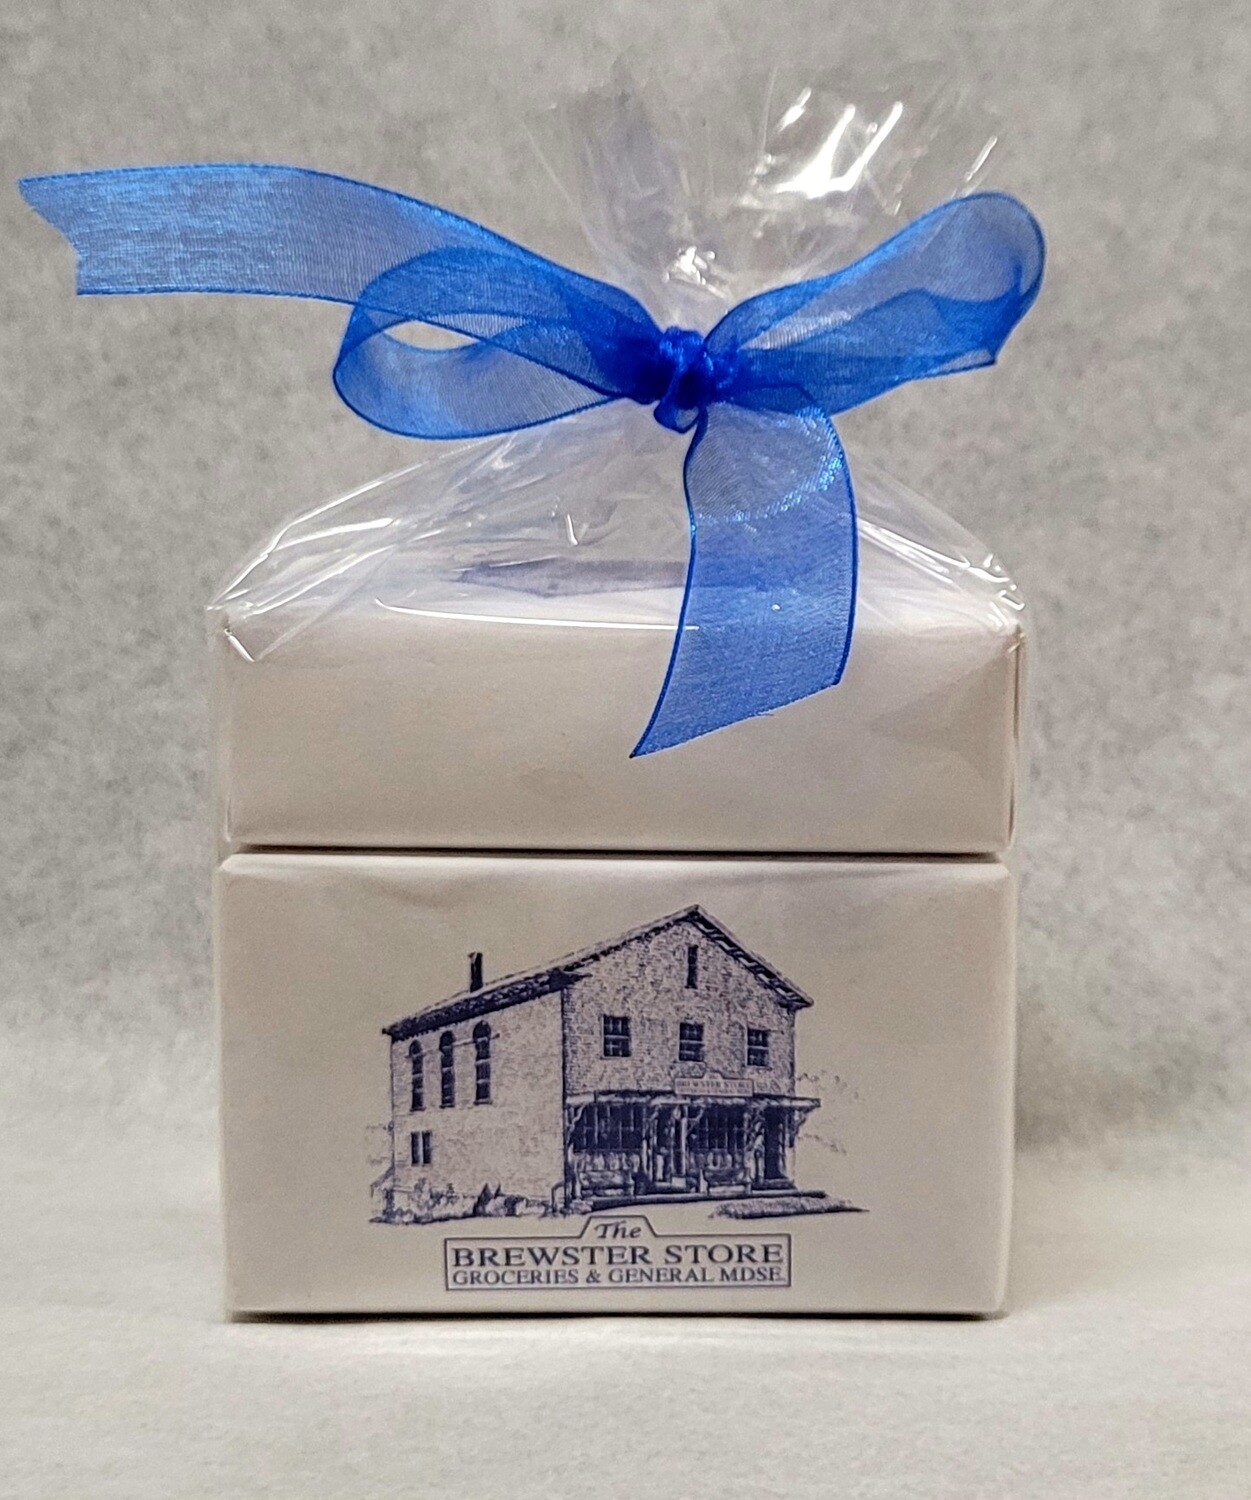 Brewster Store Soap Lavender Gift Pack